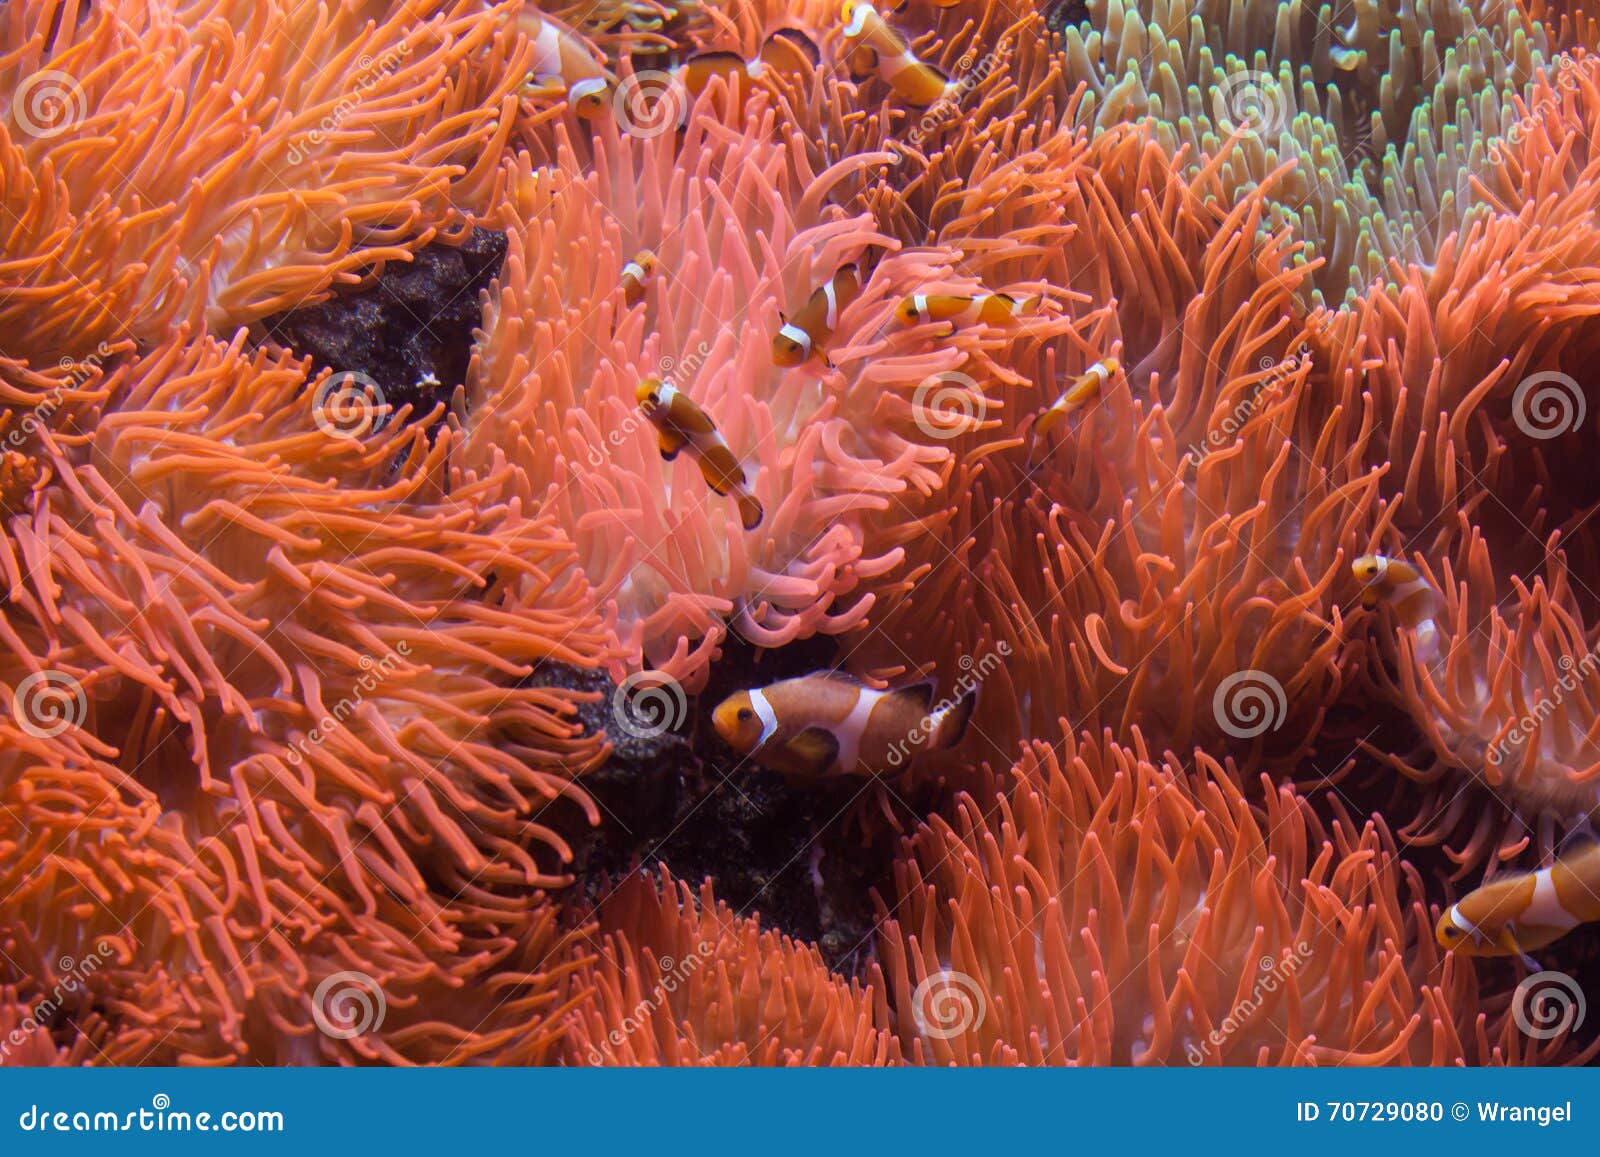 ocellaris clownfish (amphiprion ocellaris).